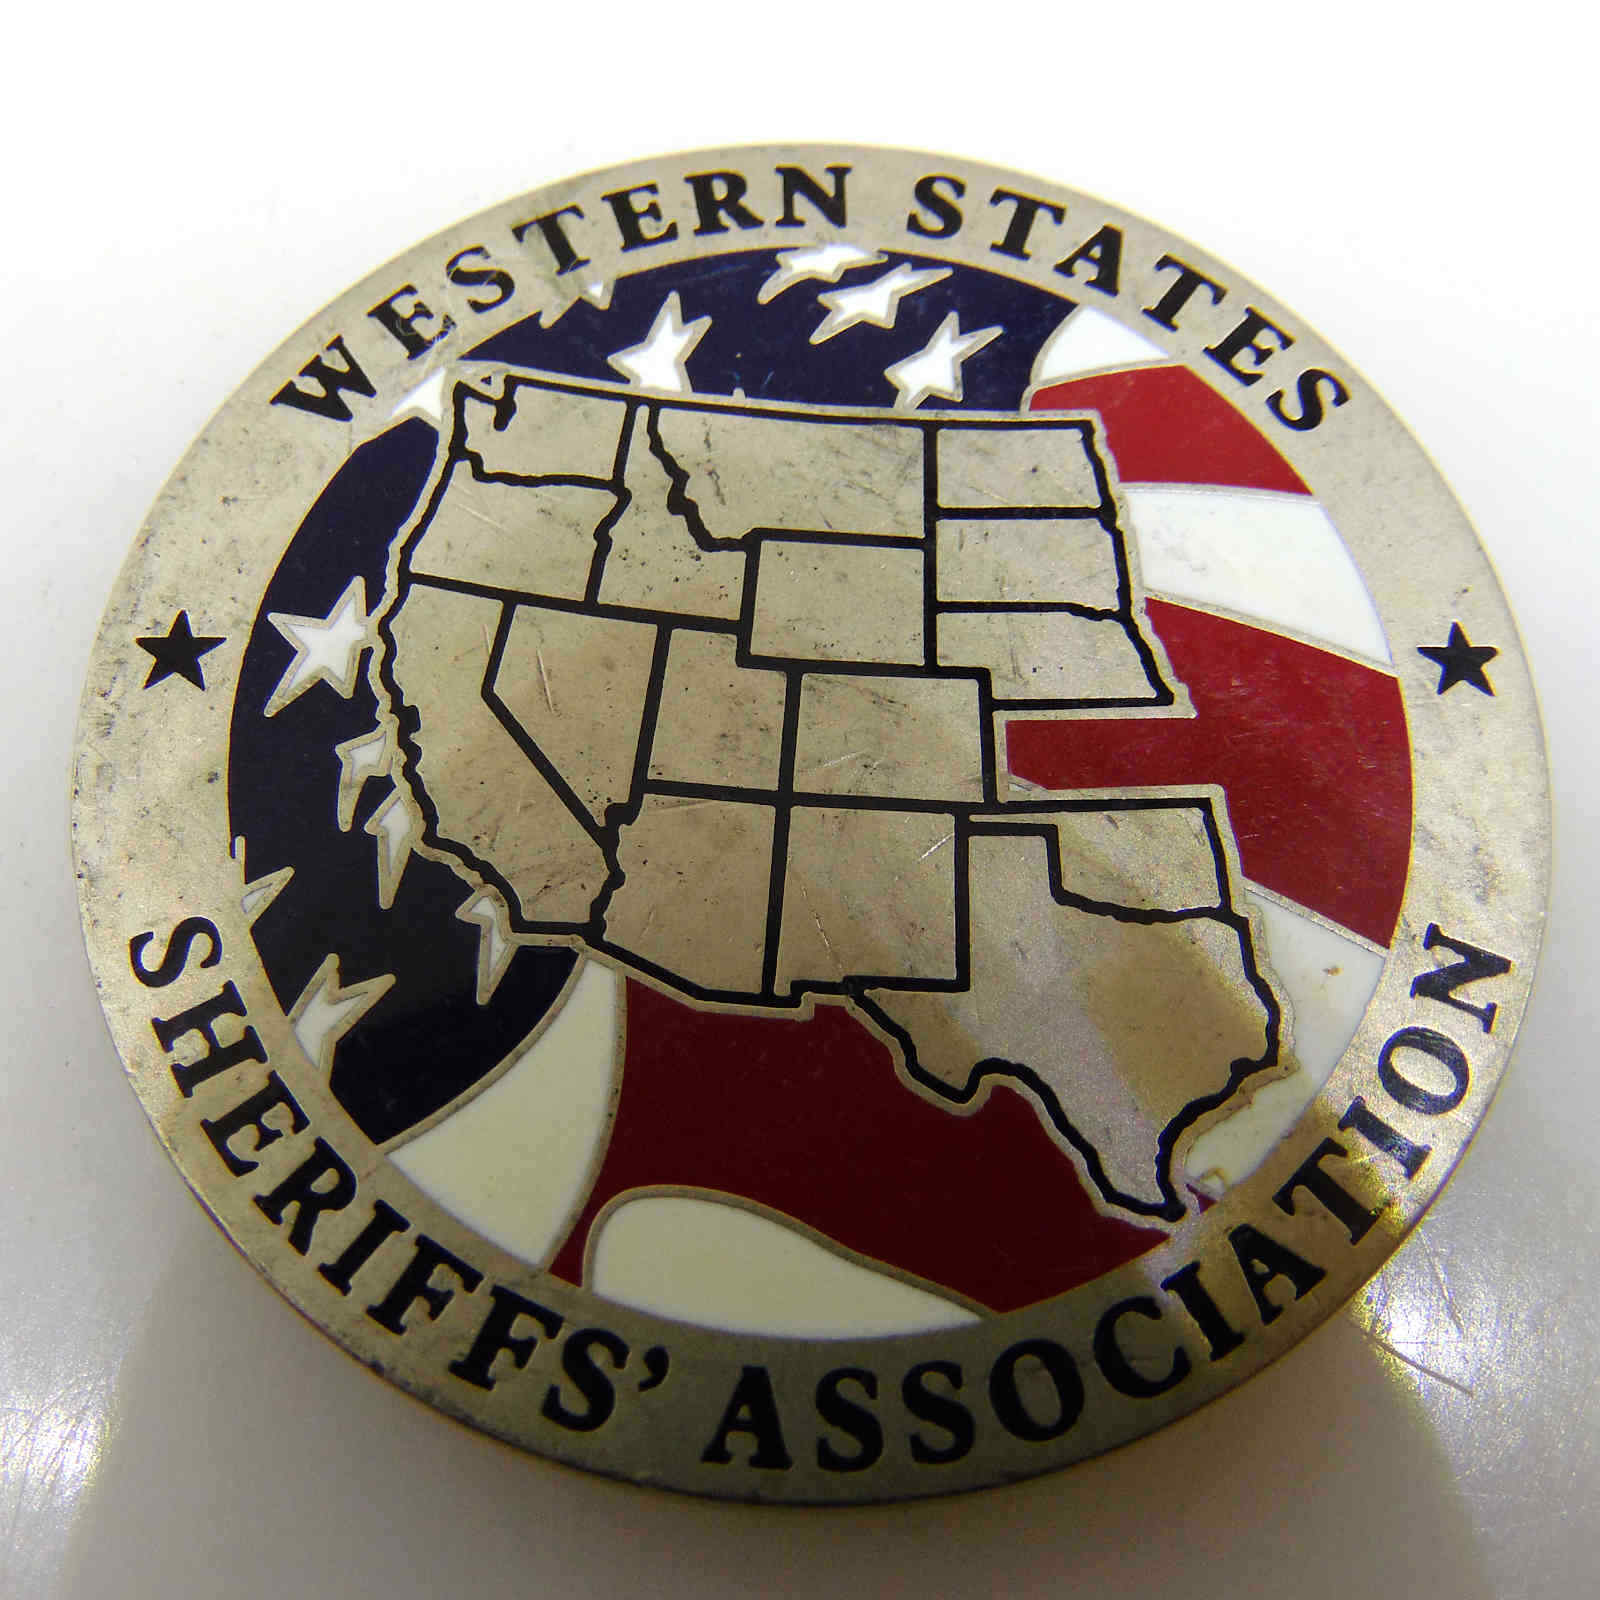 WESTERN STATES SHERIFF ASSOCIATION CHALLENGE COIN